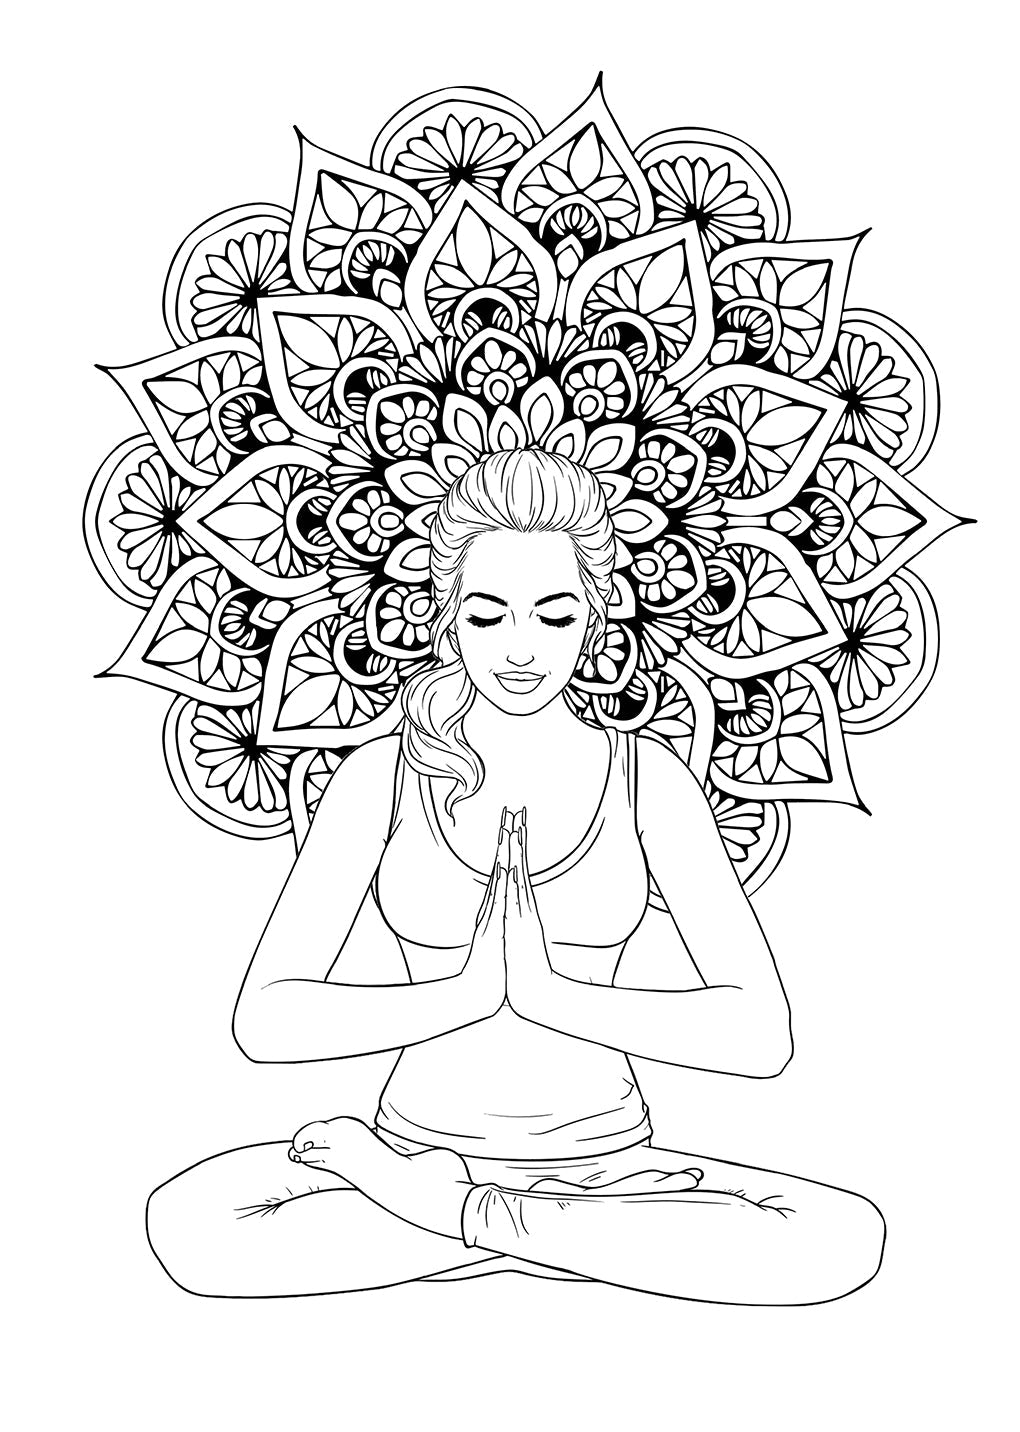 Yoga Coloring Book for Adults Mandala (Digital) - Monsoon Publishing USA